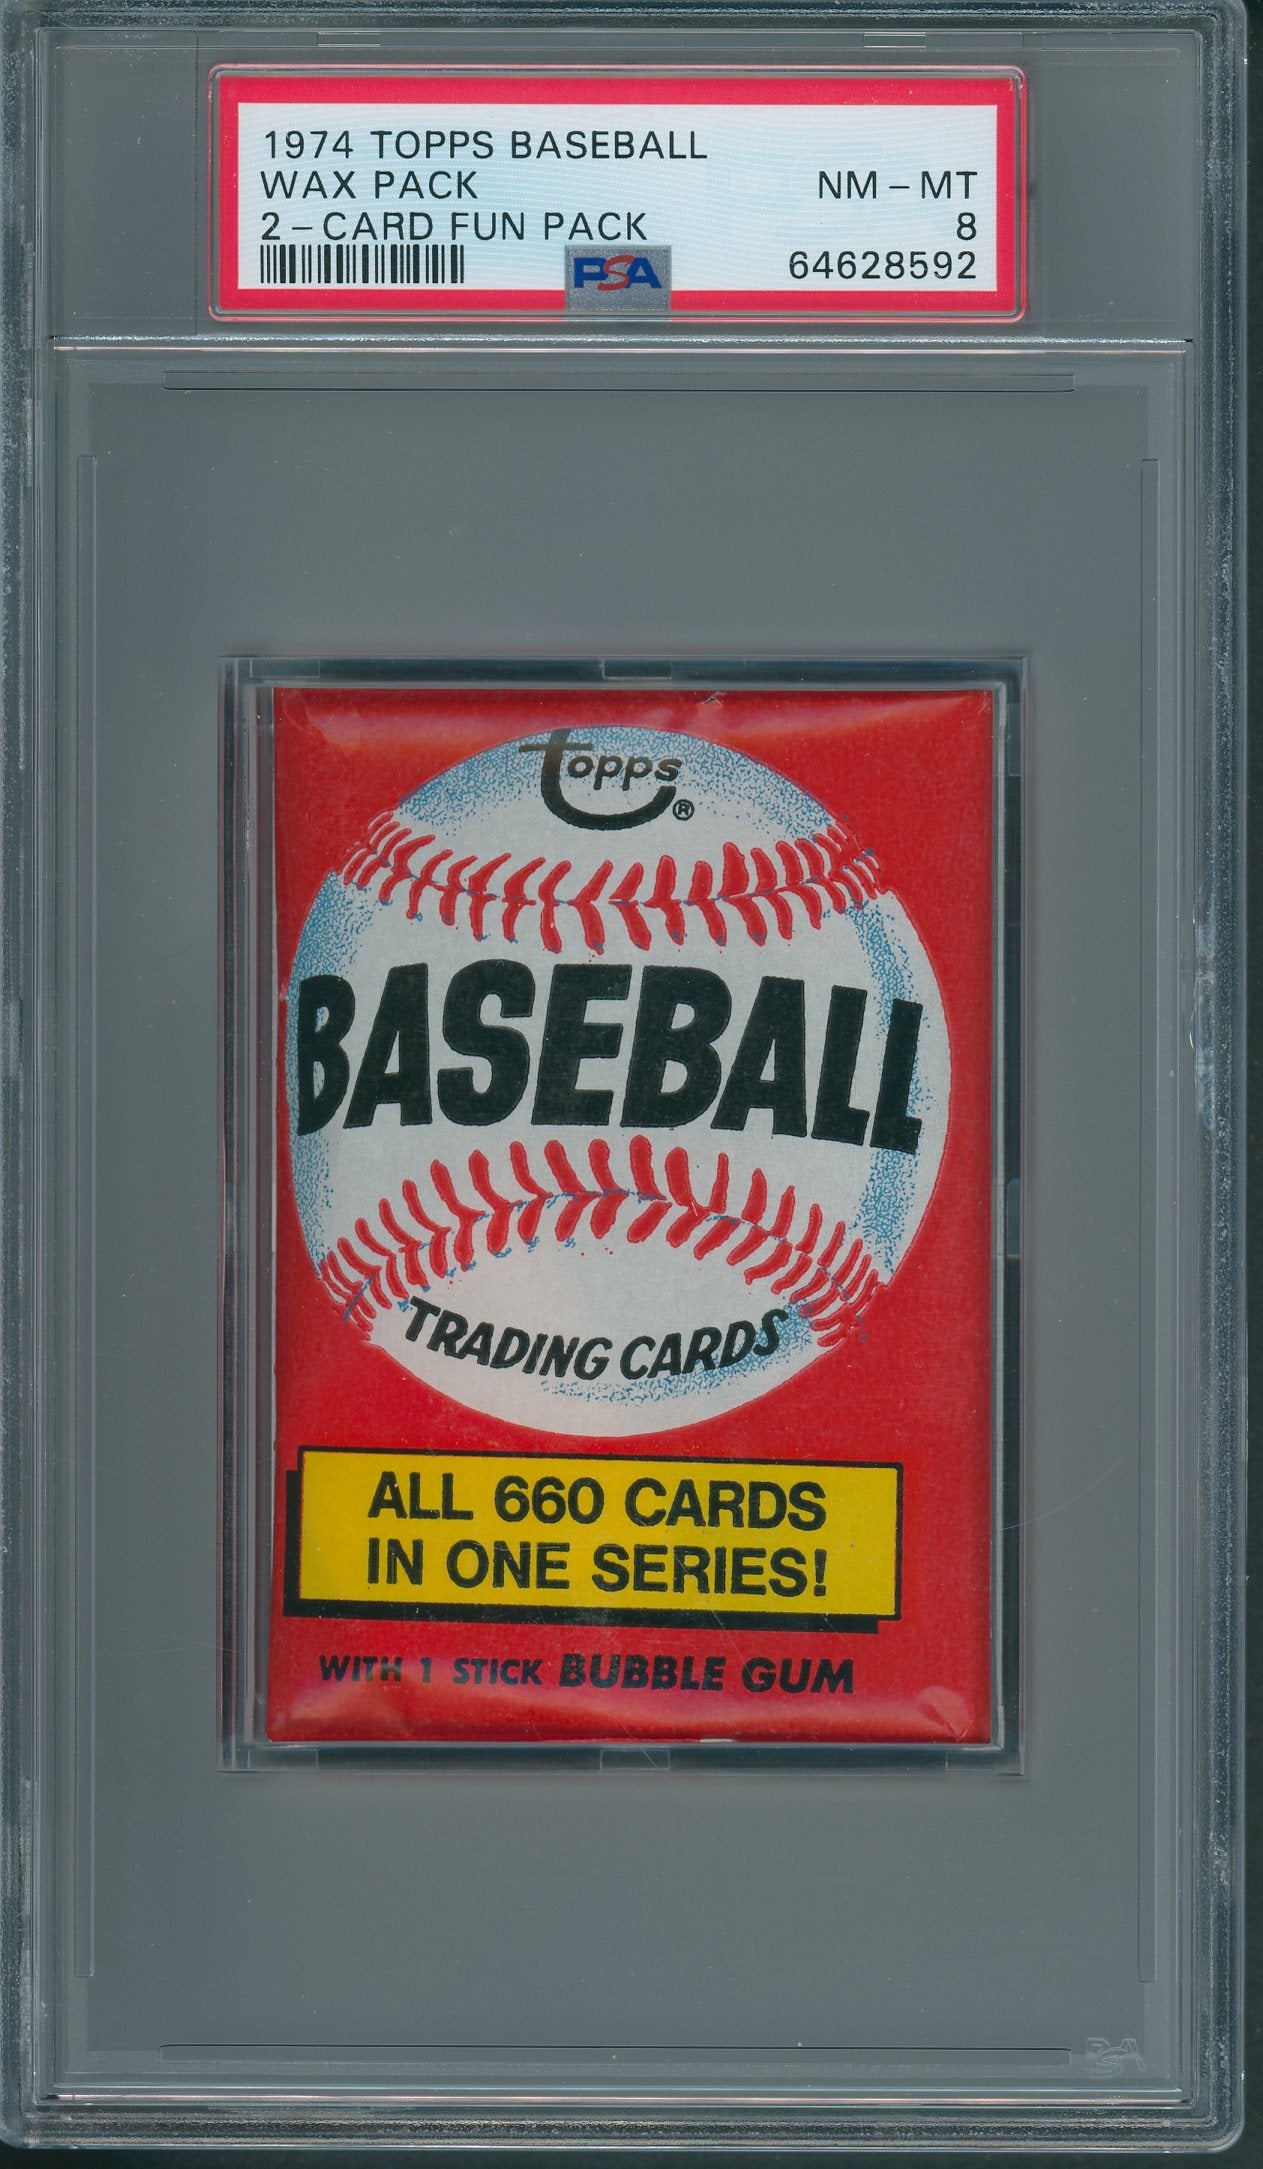 1974 Topps Baseball Fun Pack (2 Card) Unopened Wax Pack PSA 8 *8592